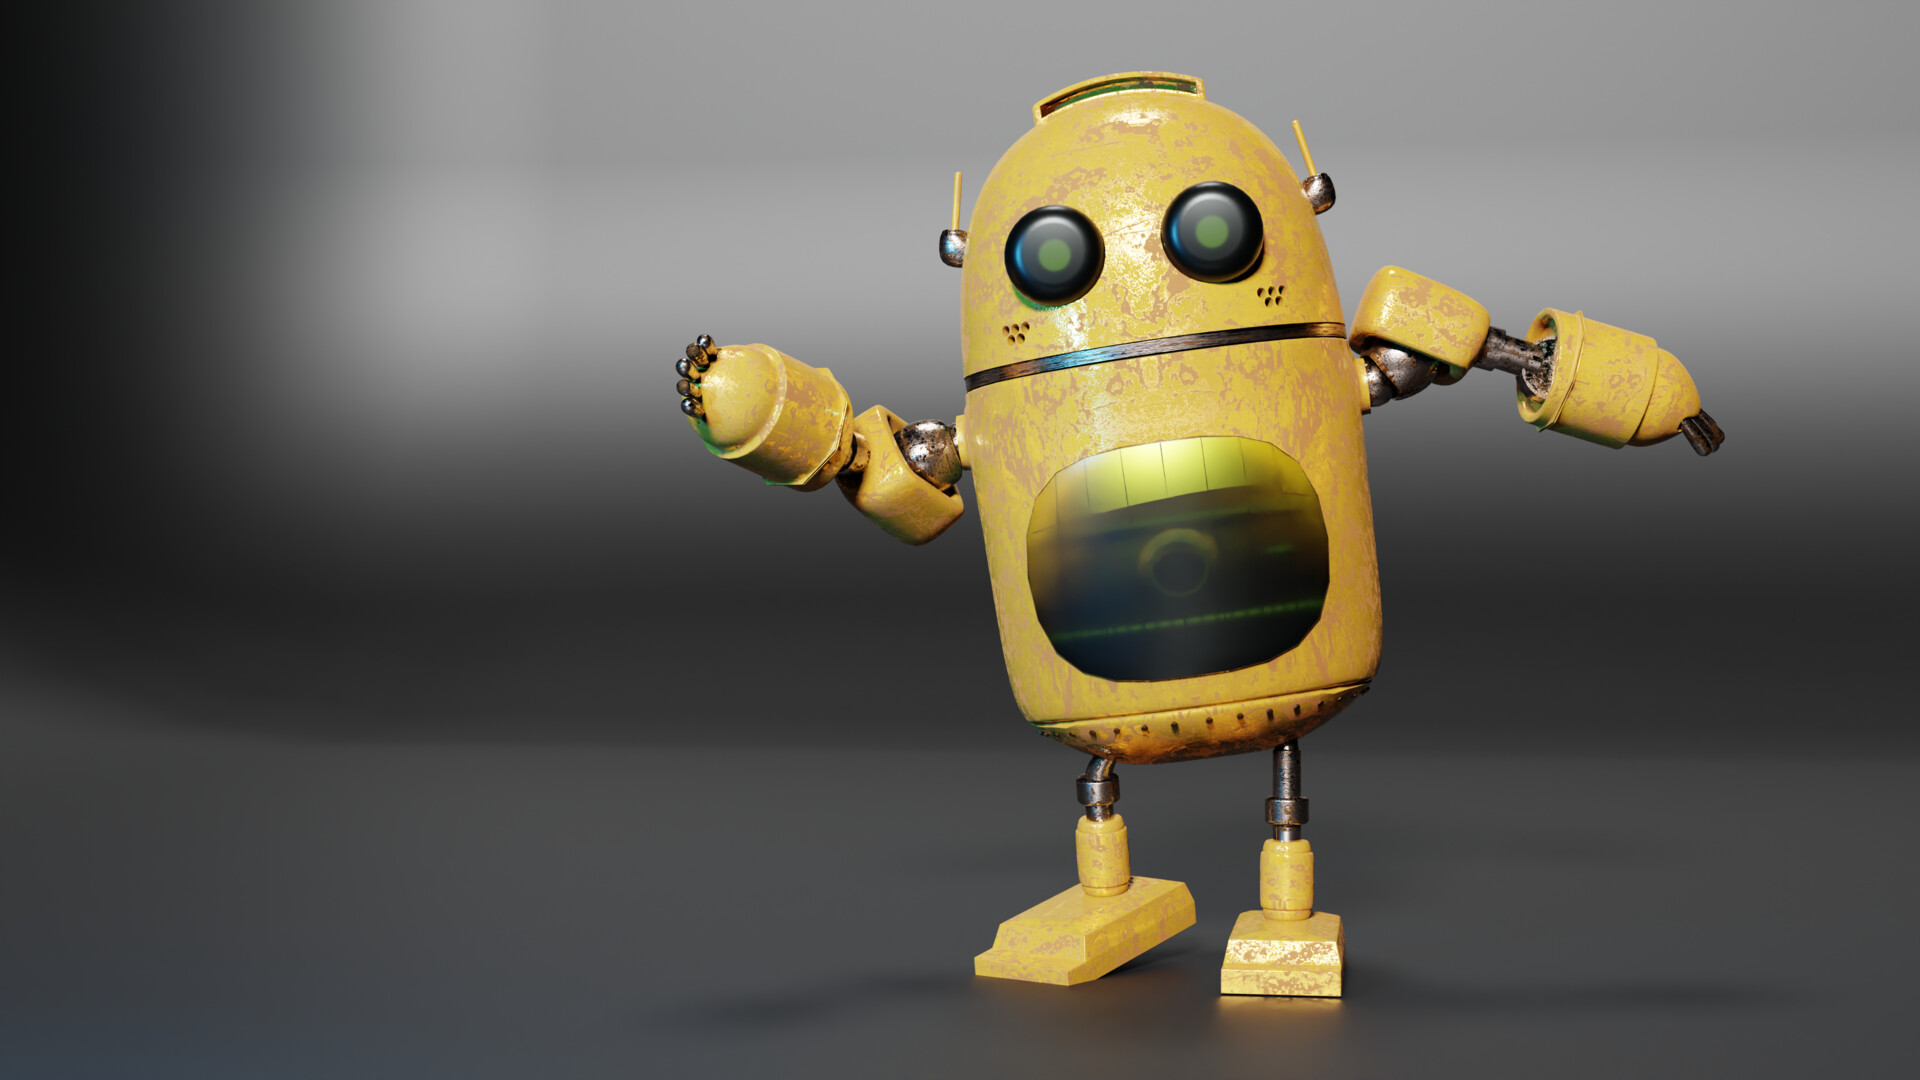 ArtStation - Mr. Robot